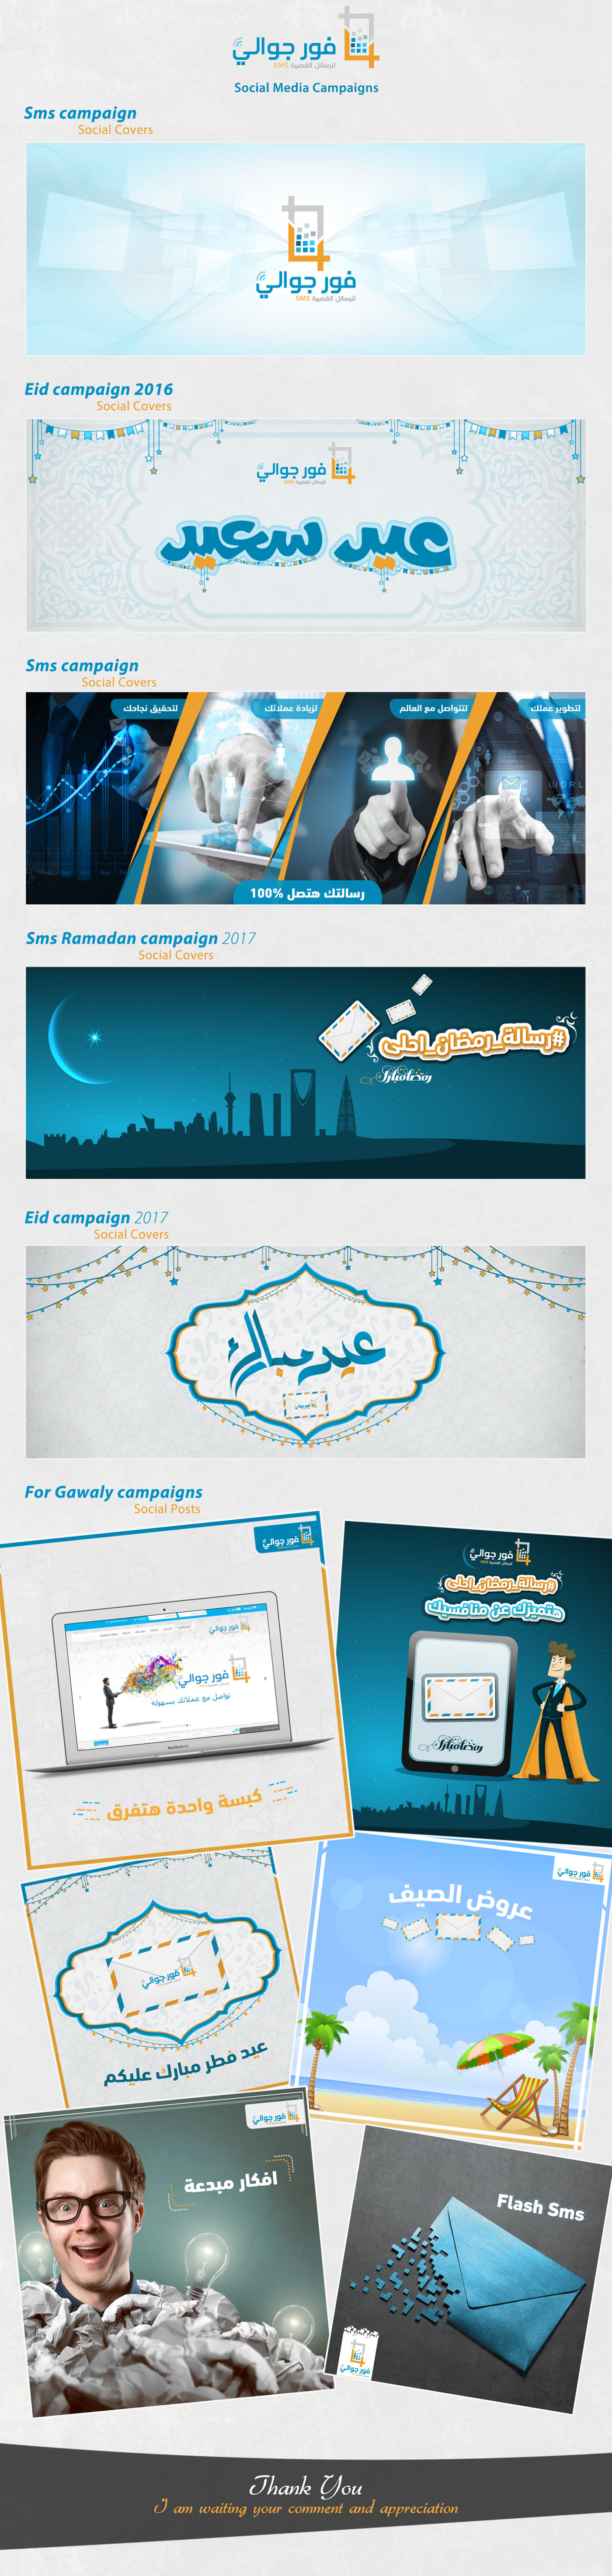 4jawaly Saudi SMS social media posts social media cover Eid social media